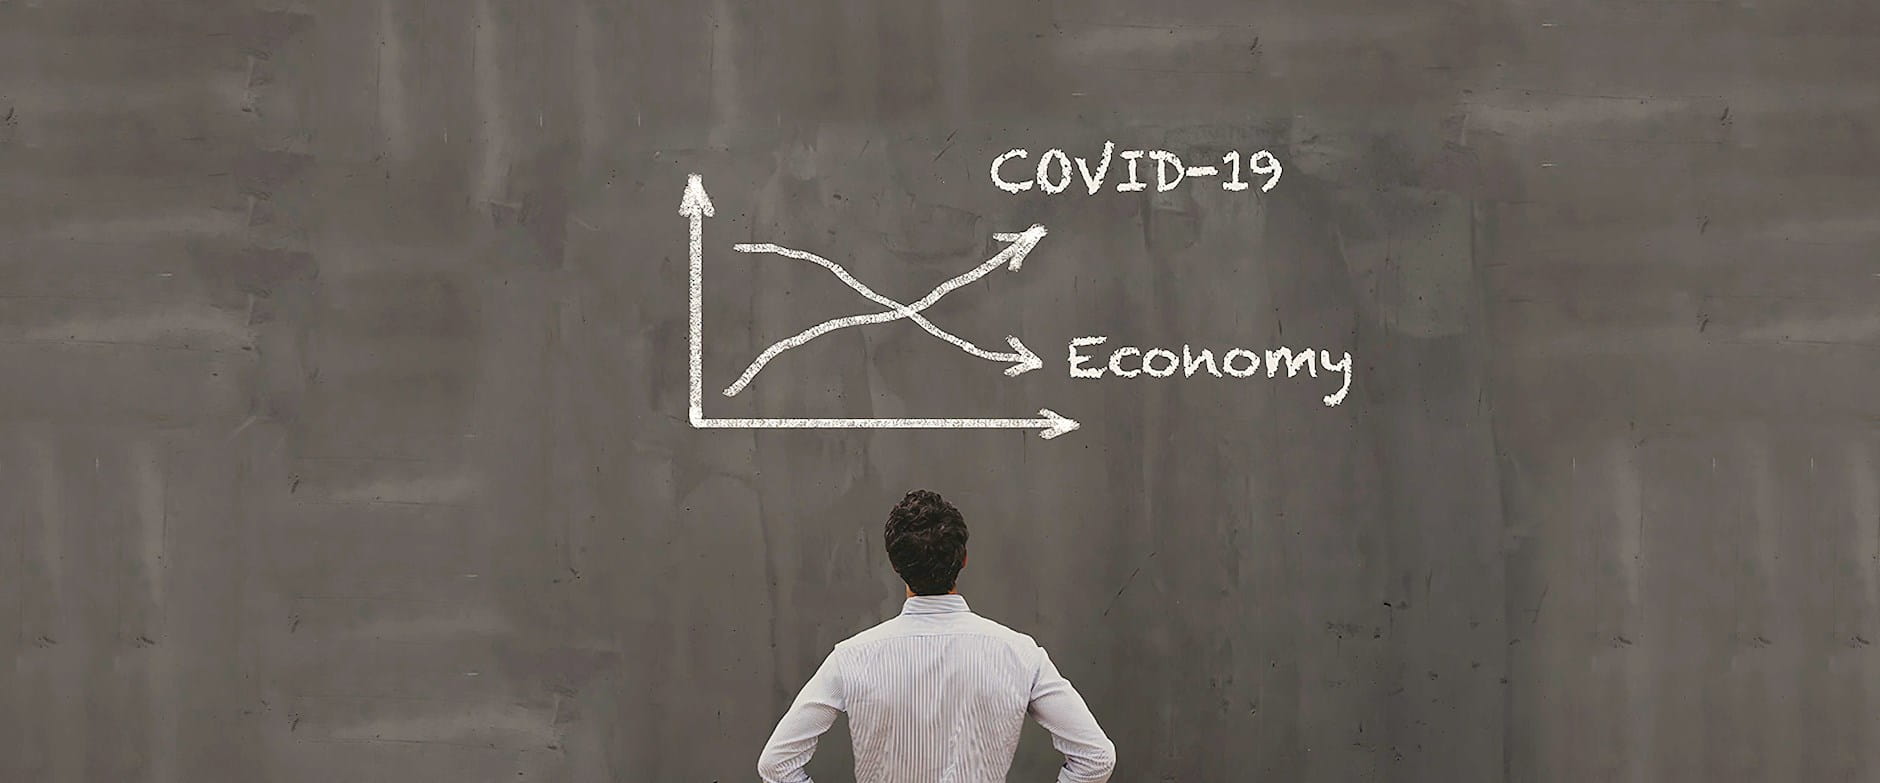 Man looking at covid-19 chart on chalkboard